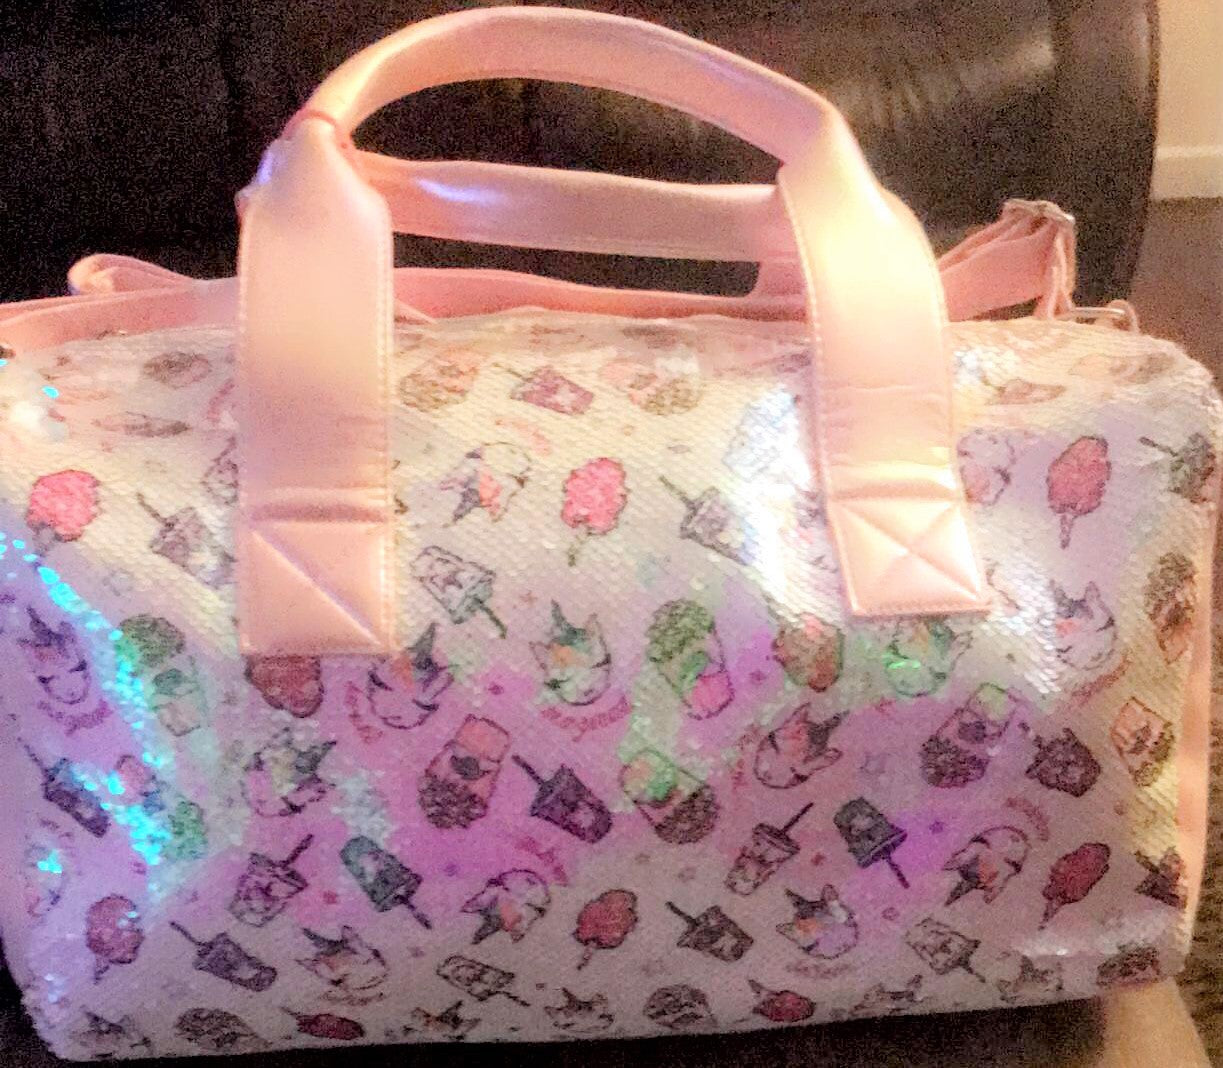 Unicorn Duffle Bag – LNDKIDS